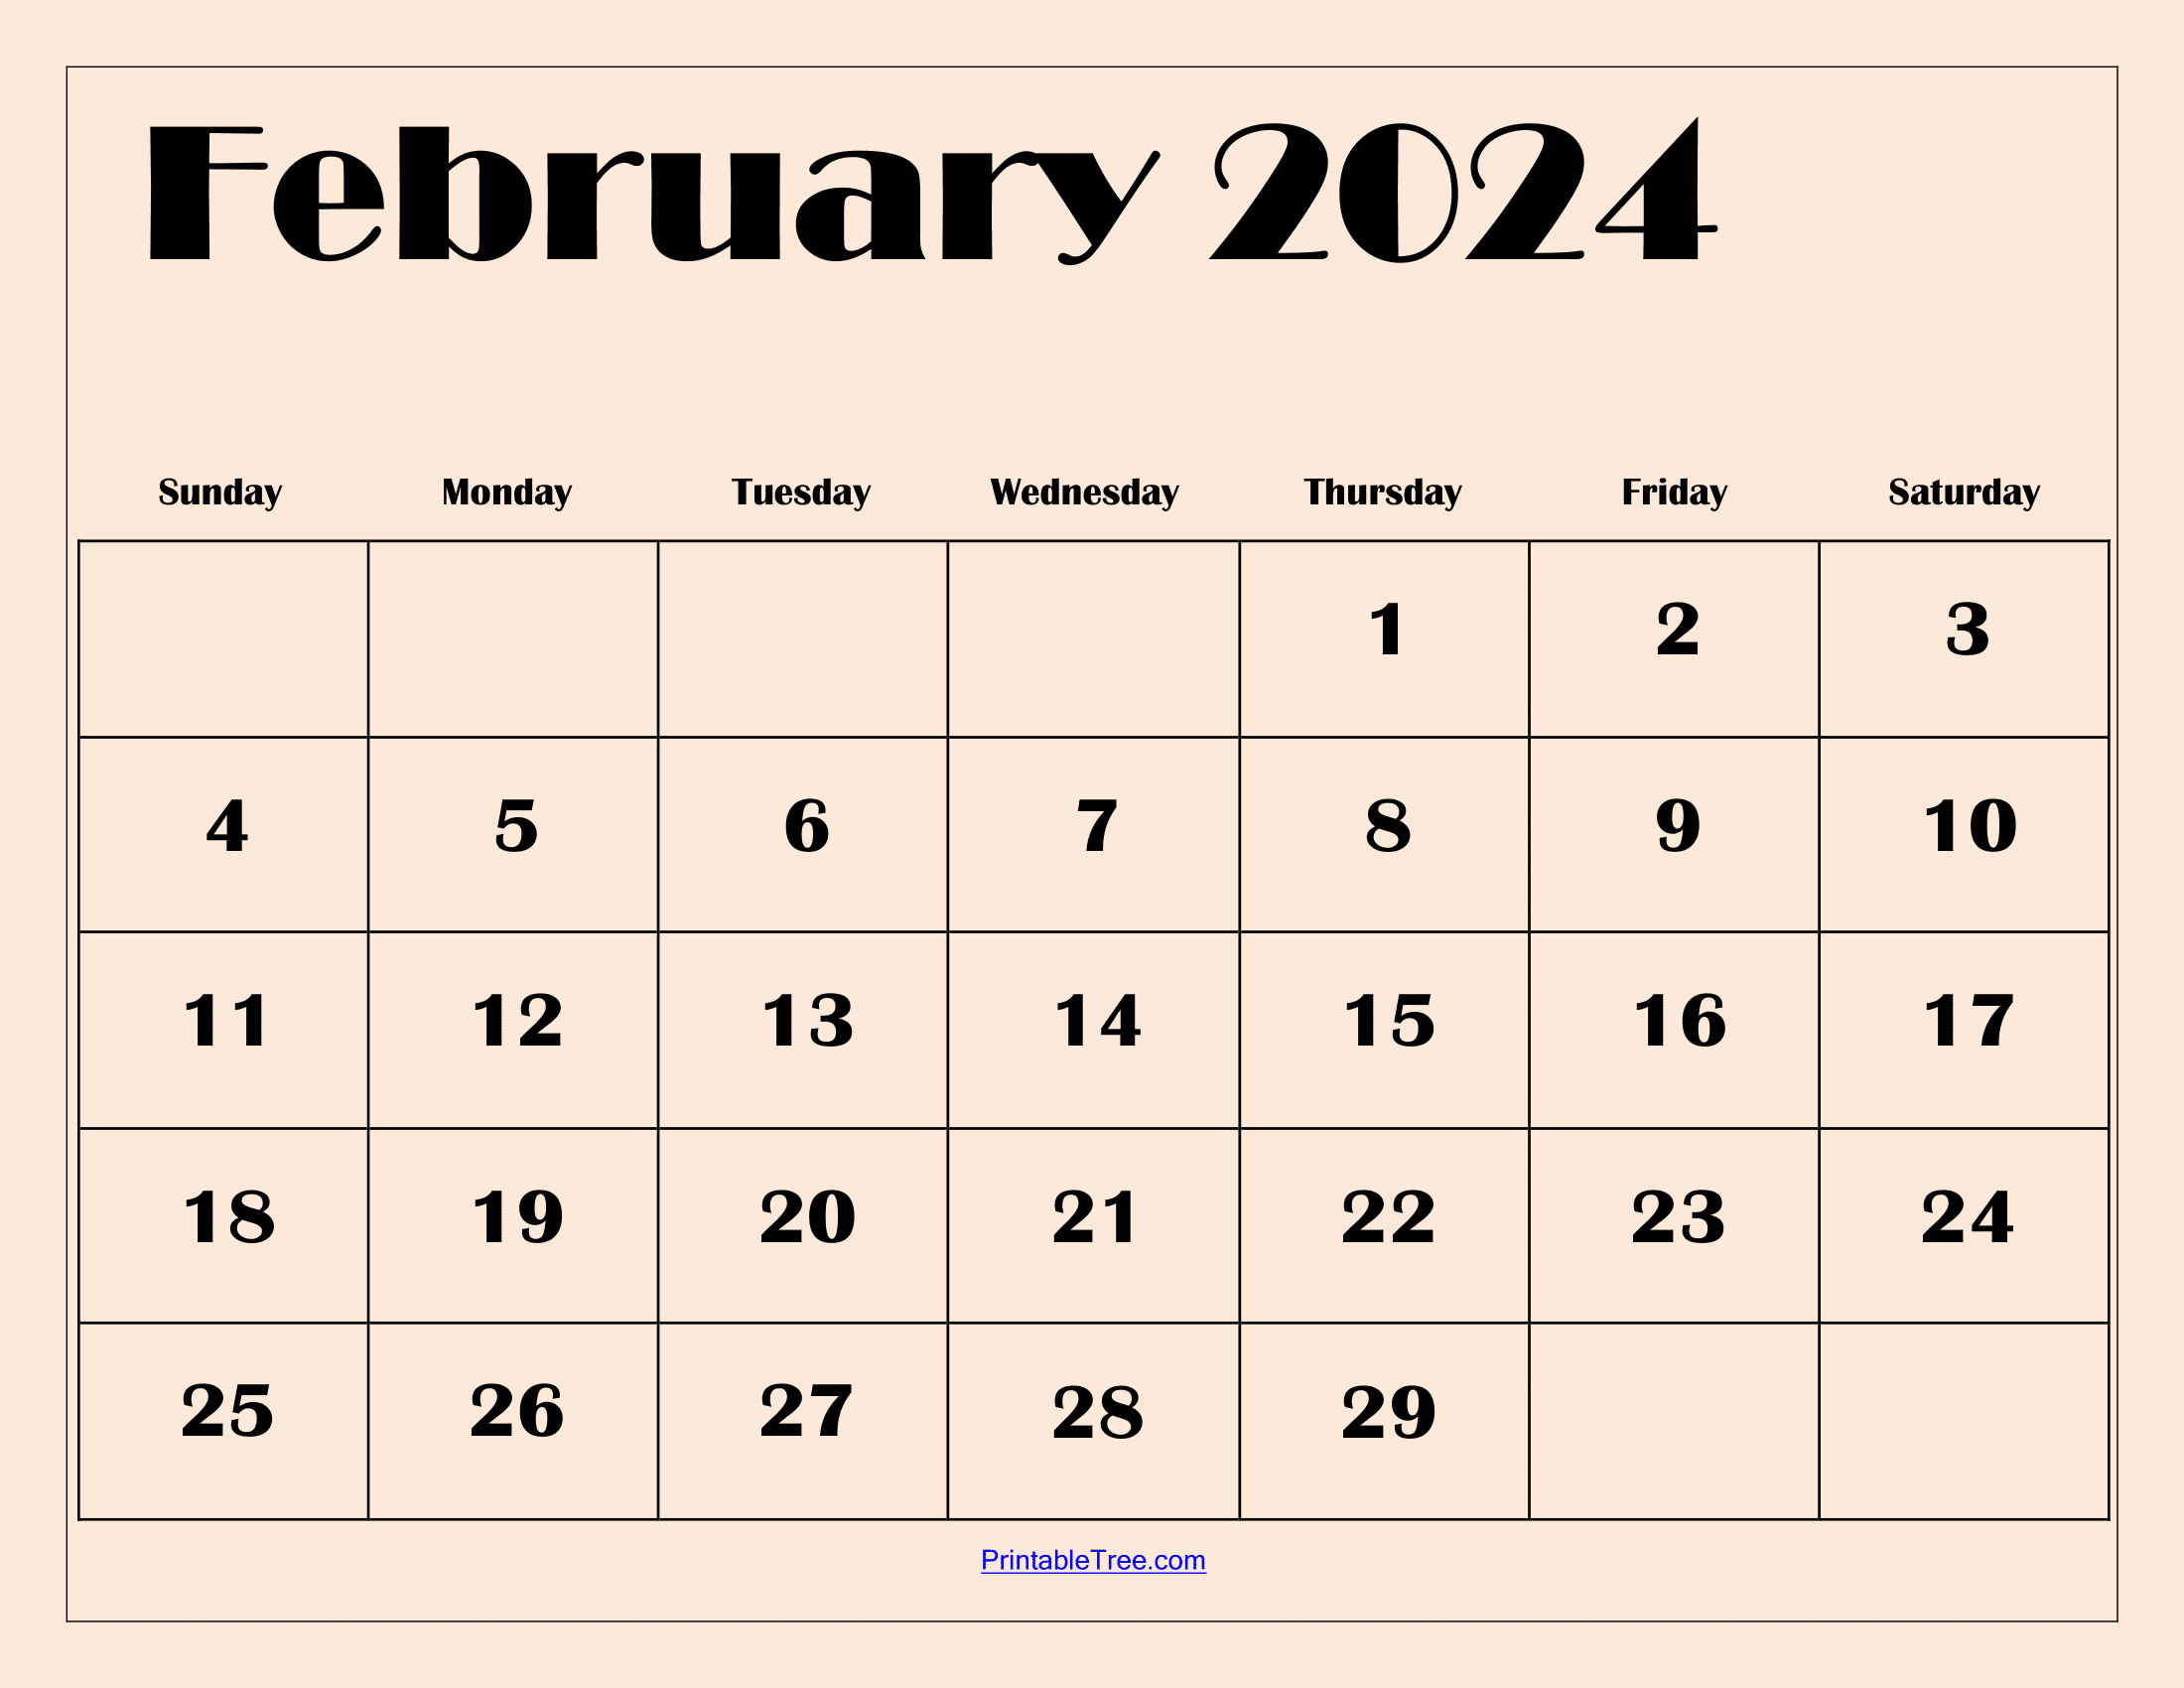 February 2024 Calendar Printable Pdf Template With Holidays regarding February 2024 Julian Calendar